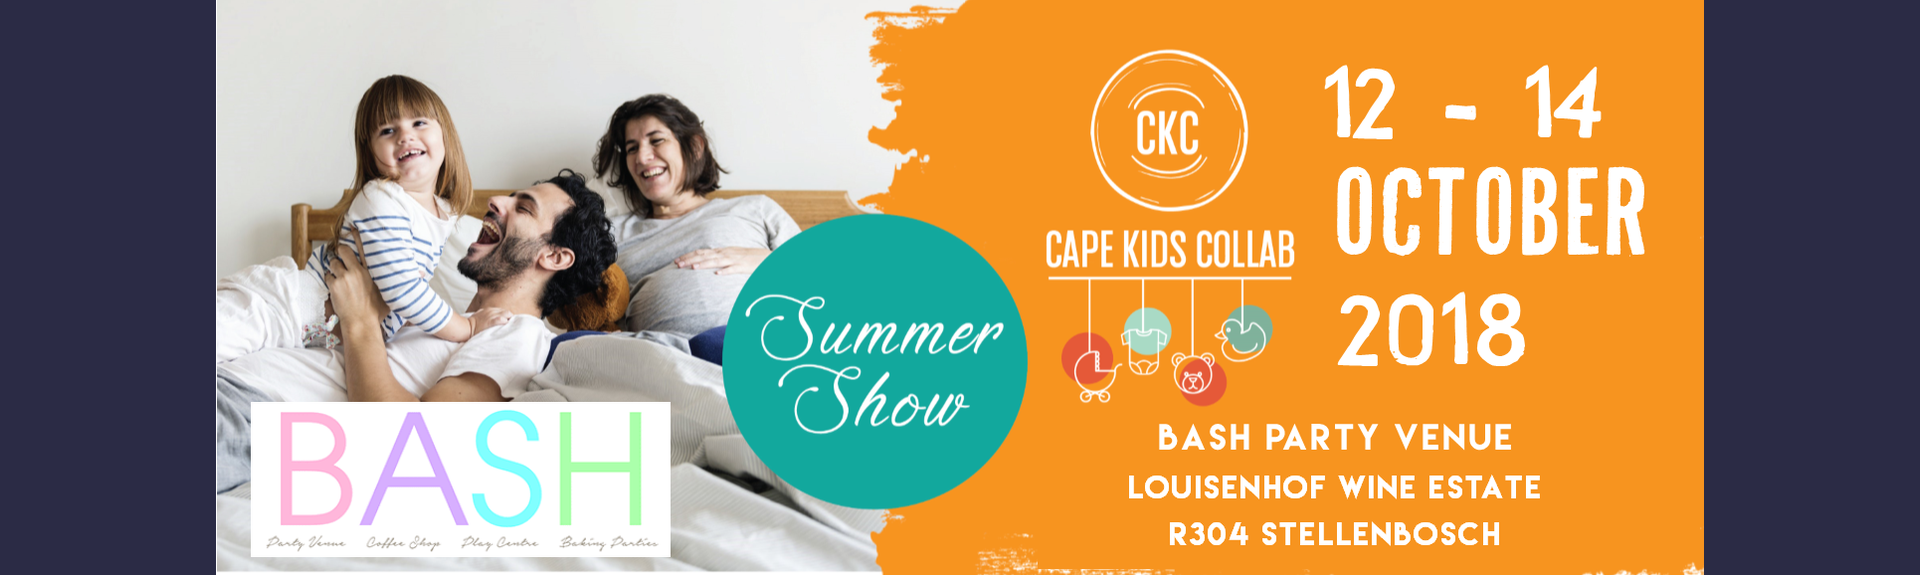 Cape Kids Collab Market - Summer 